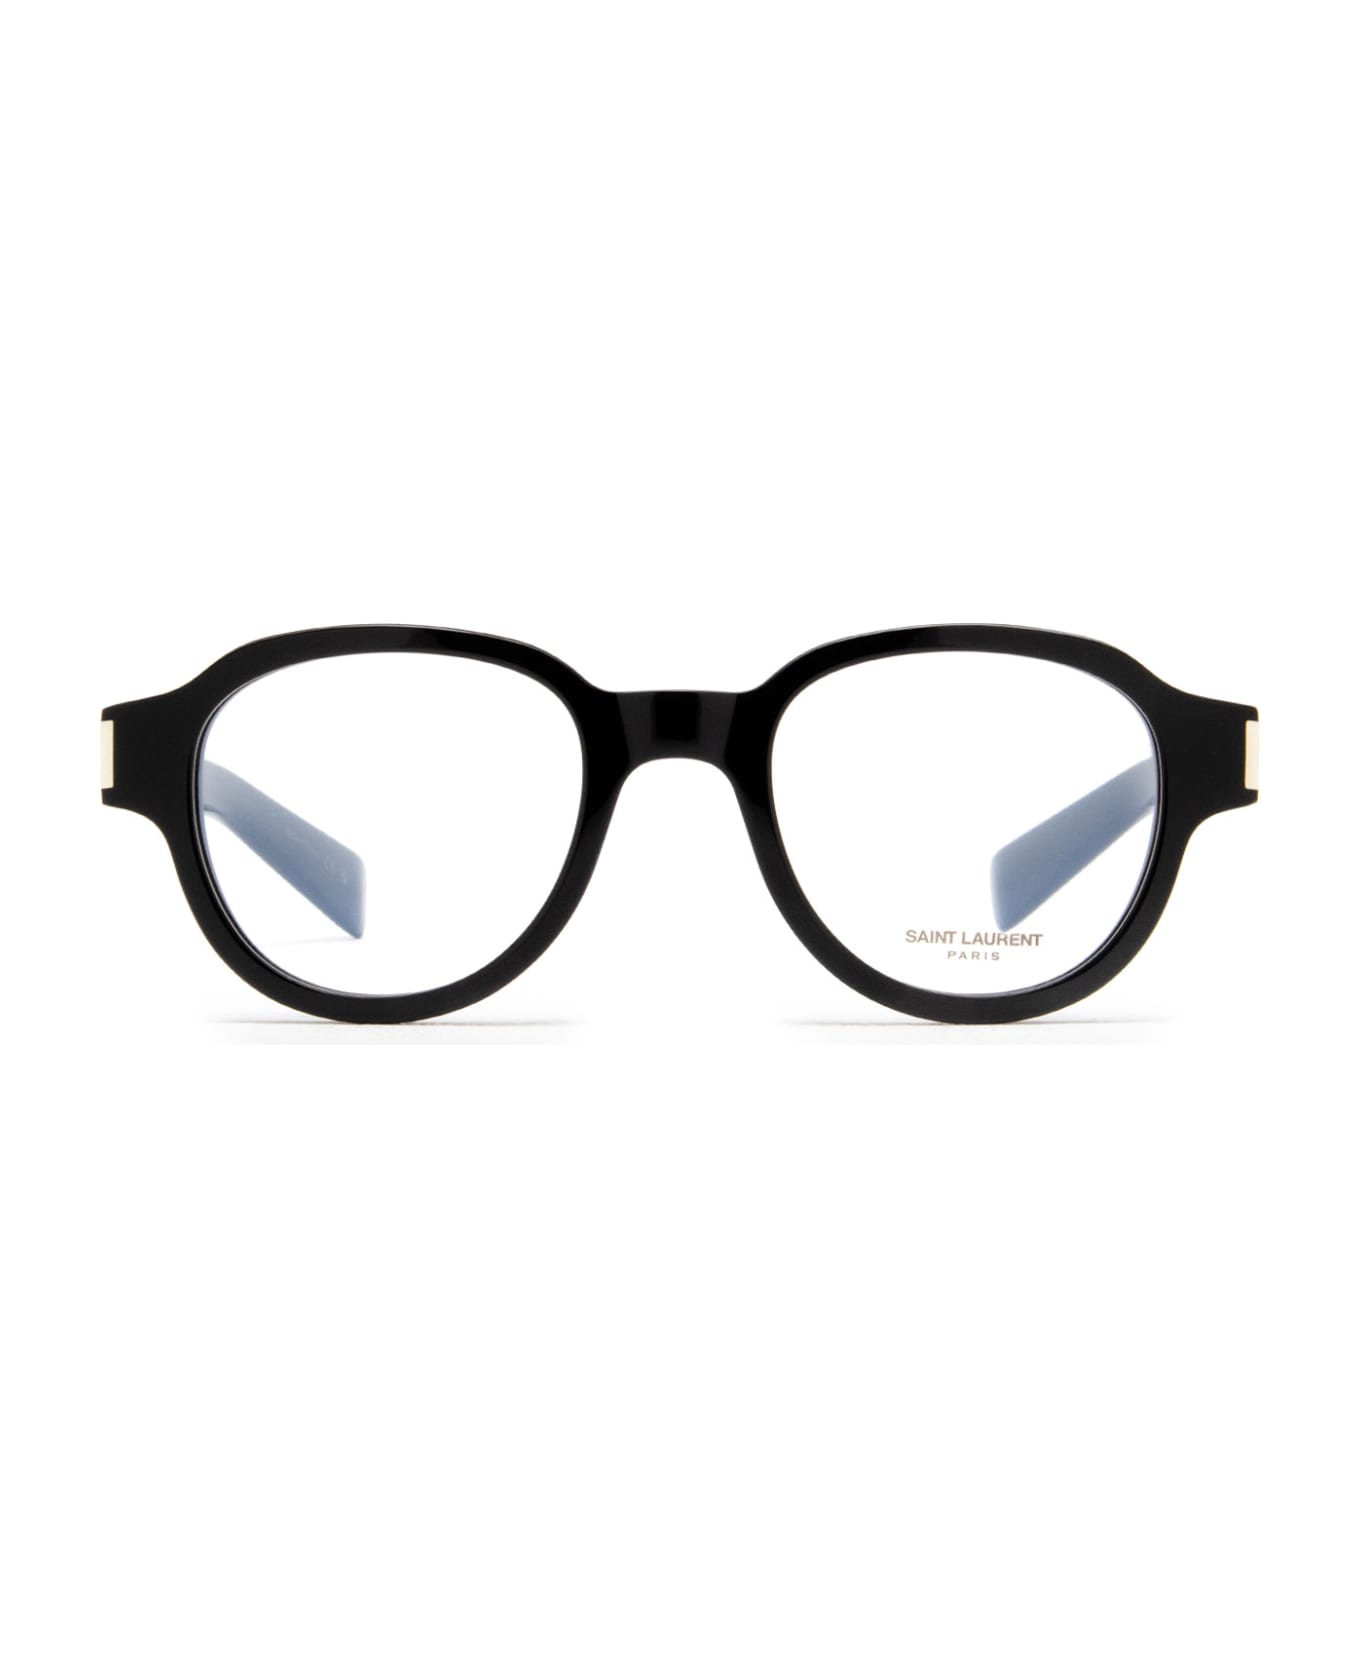 Saint Laurent Eyewear Sl 546 Opt Black Glasses - Black